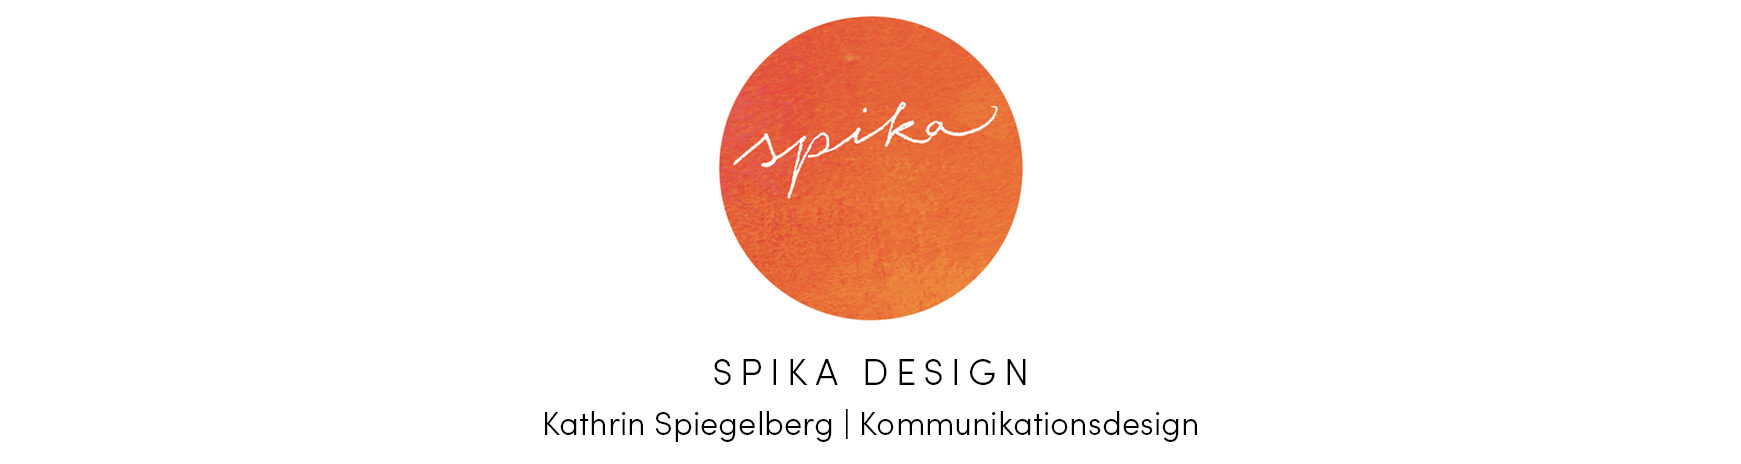 spika design